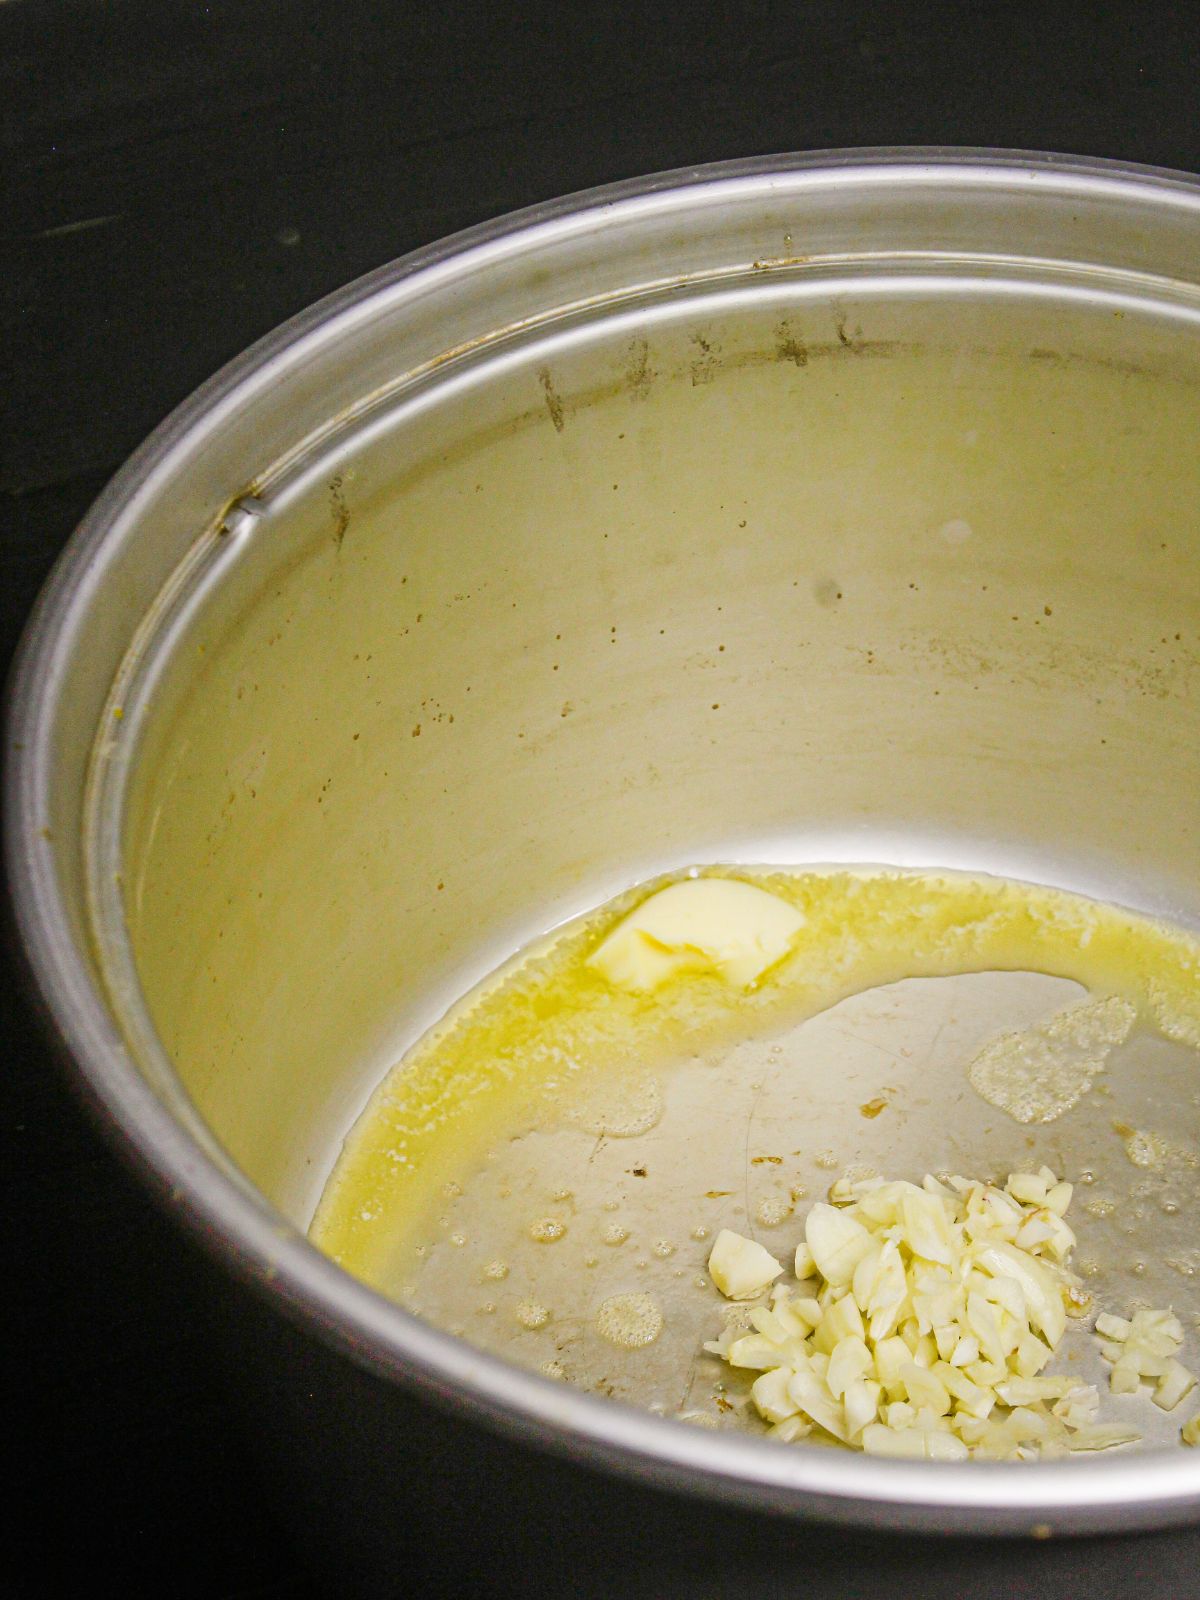 Add chopped garlic to it 